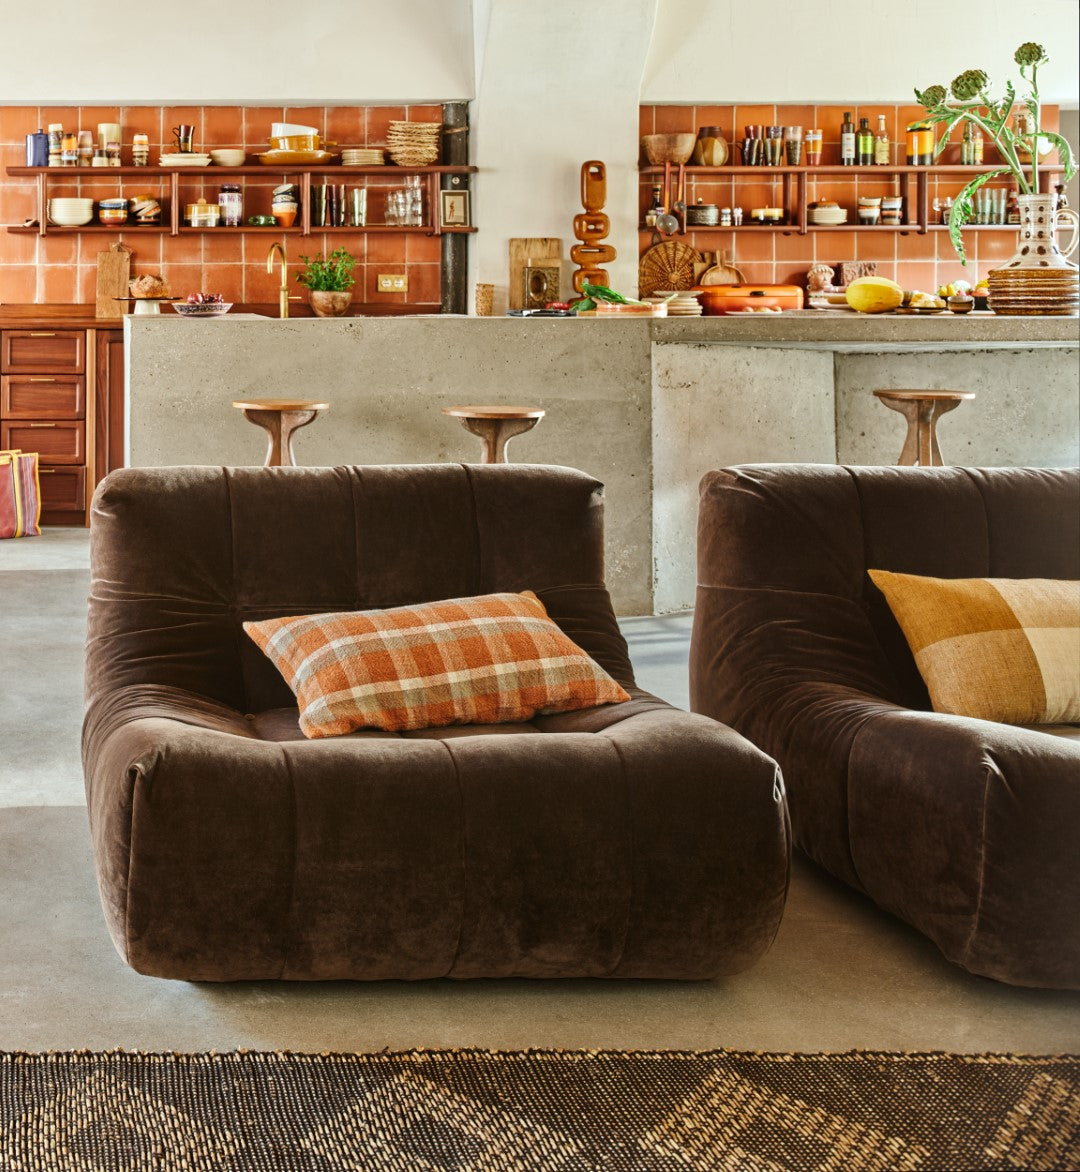 velvet brown recliner lounge chairs with orange brown lumbar pillow